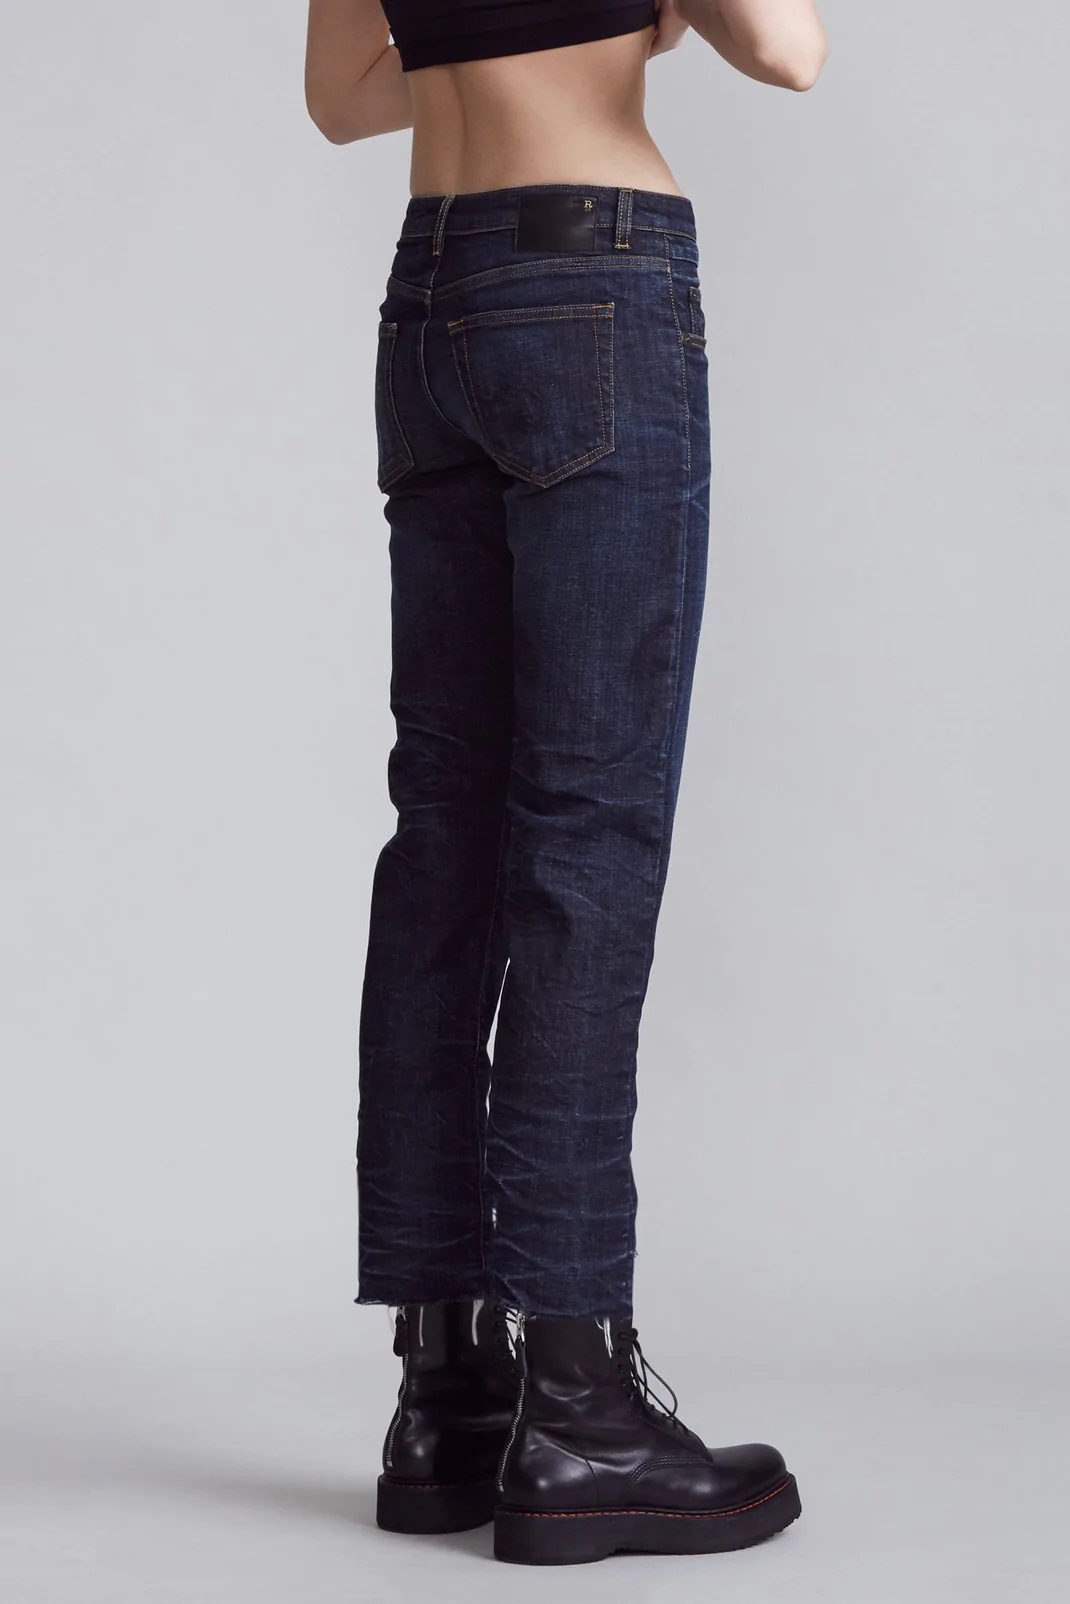 R13 Boy Straight Jeans Howell Indigo 31